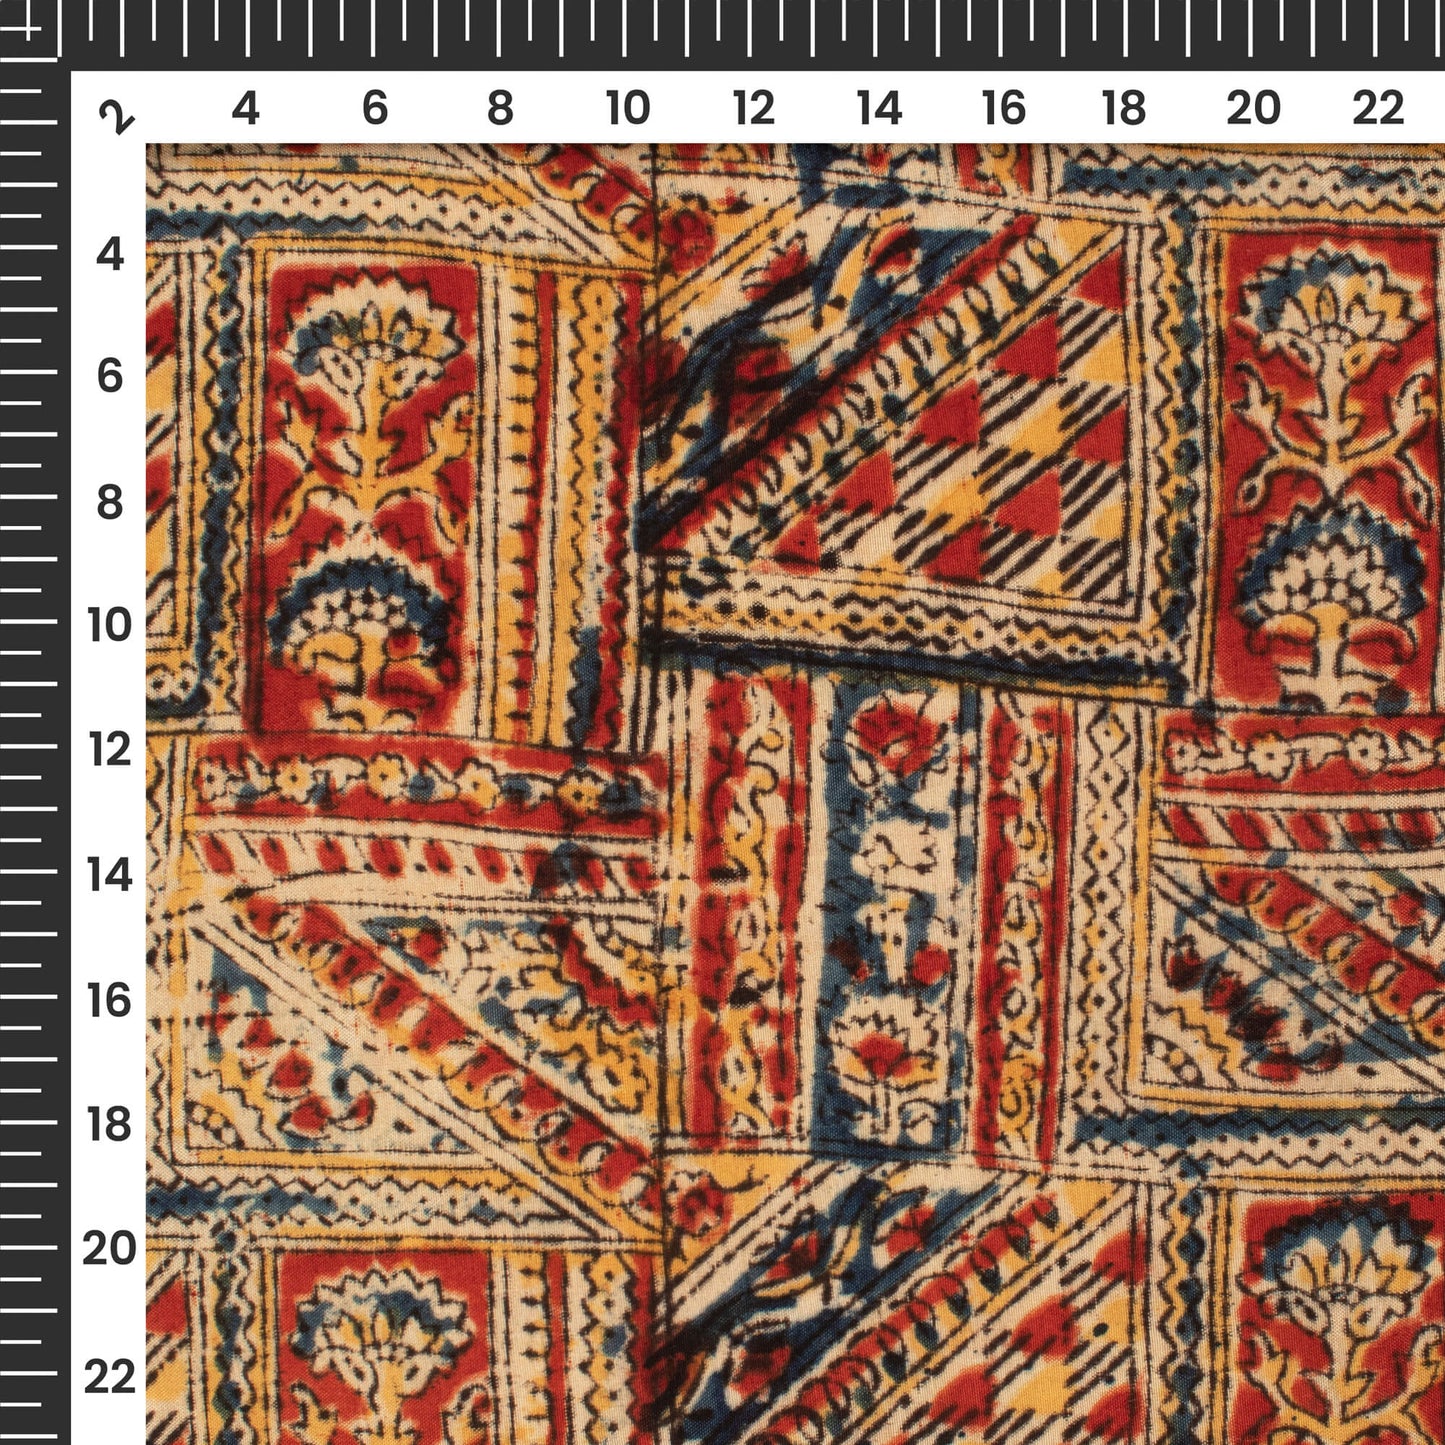 Red And Beige Traditonal Kalamkari Cotton Silk Fabric